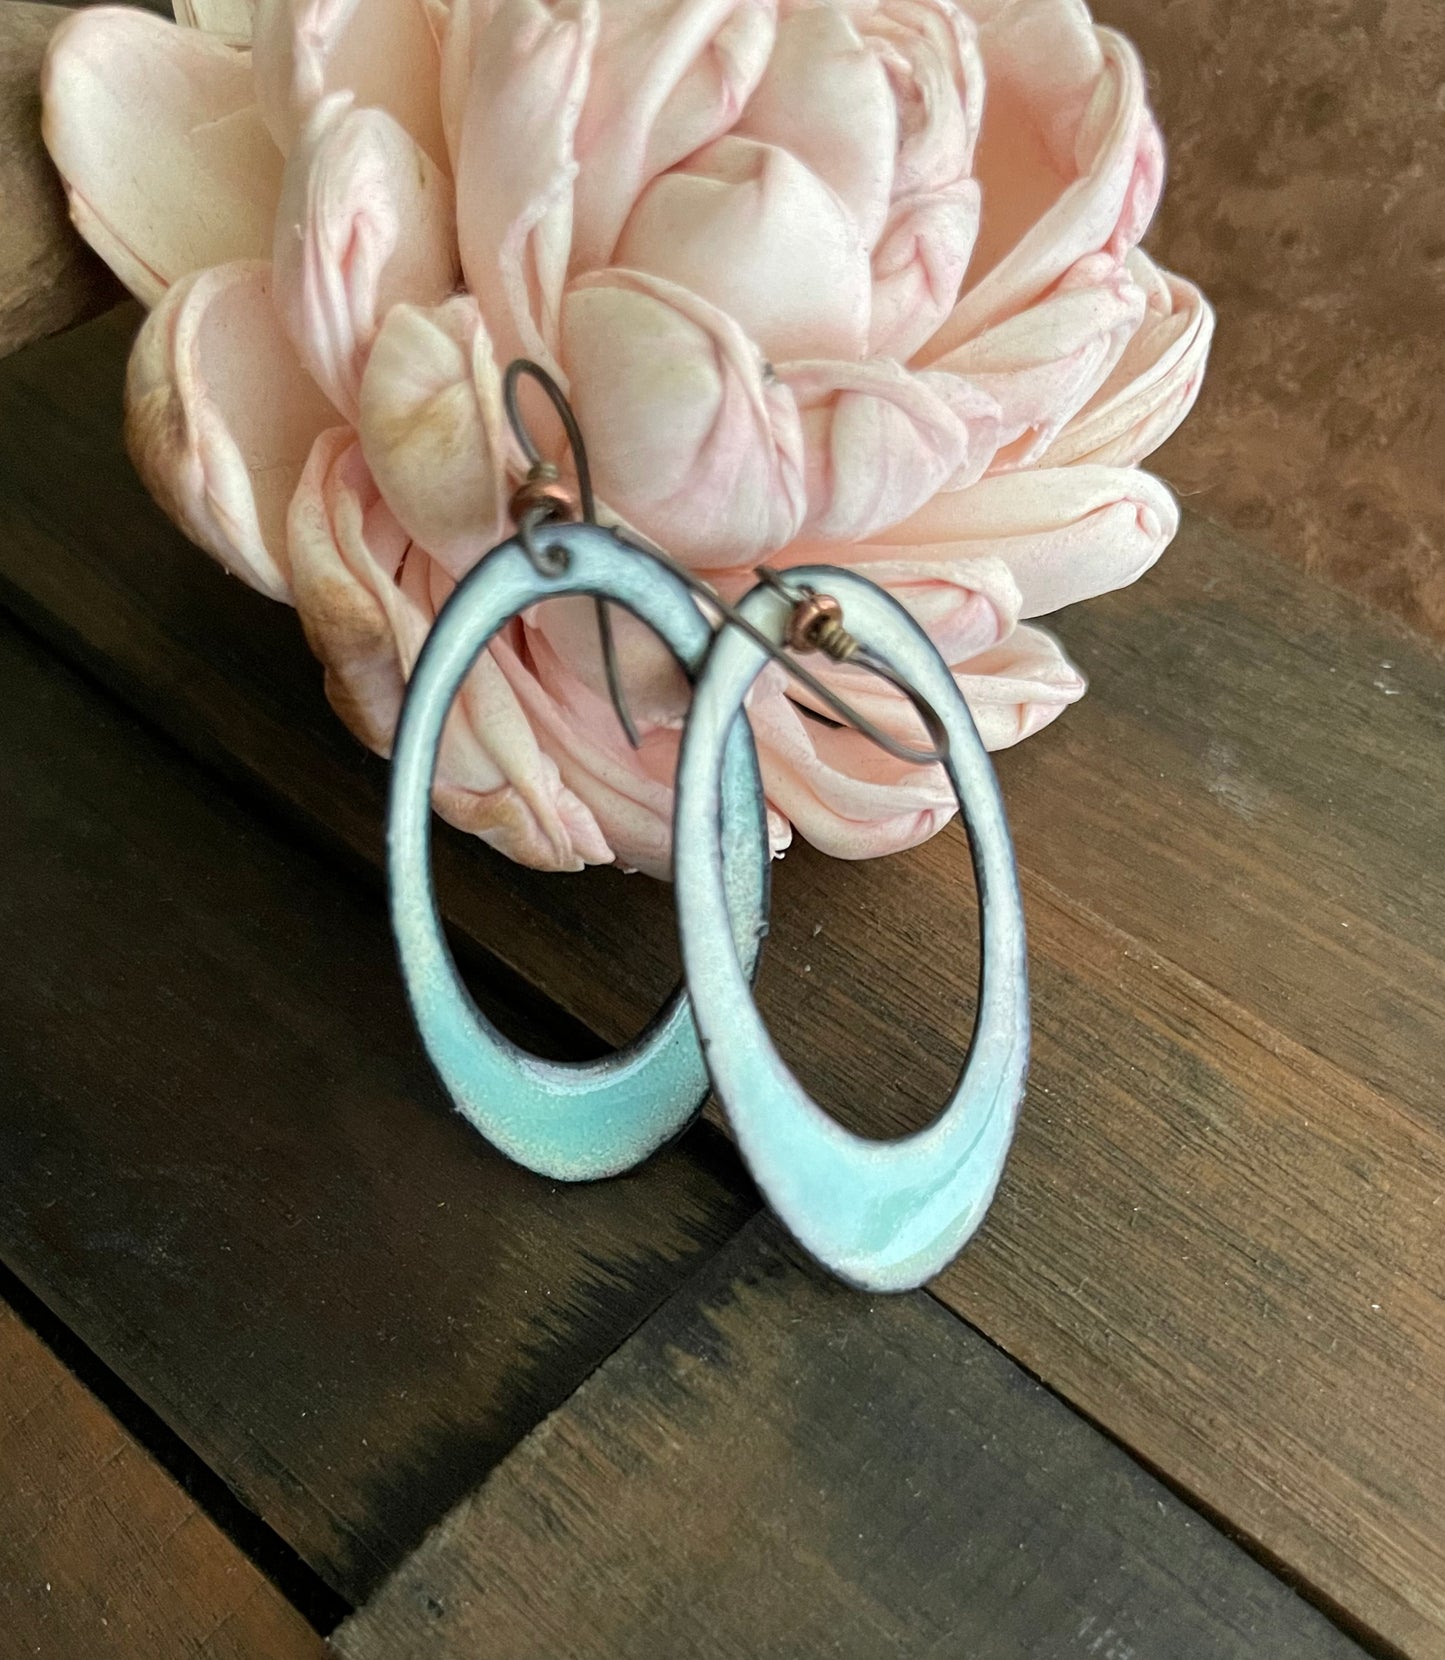 Enameled Light Blue Copper Earrings